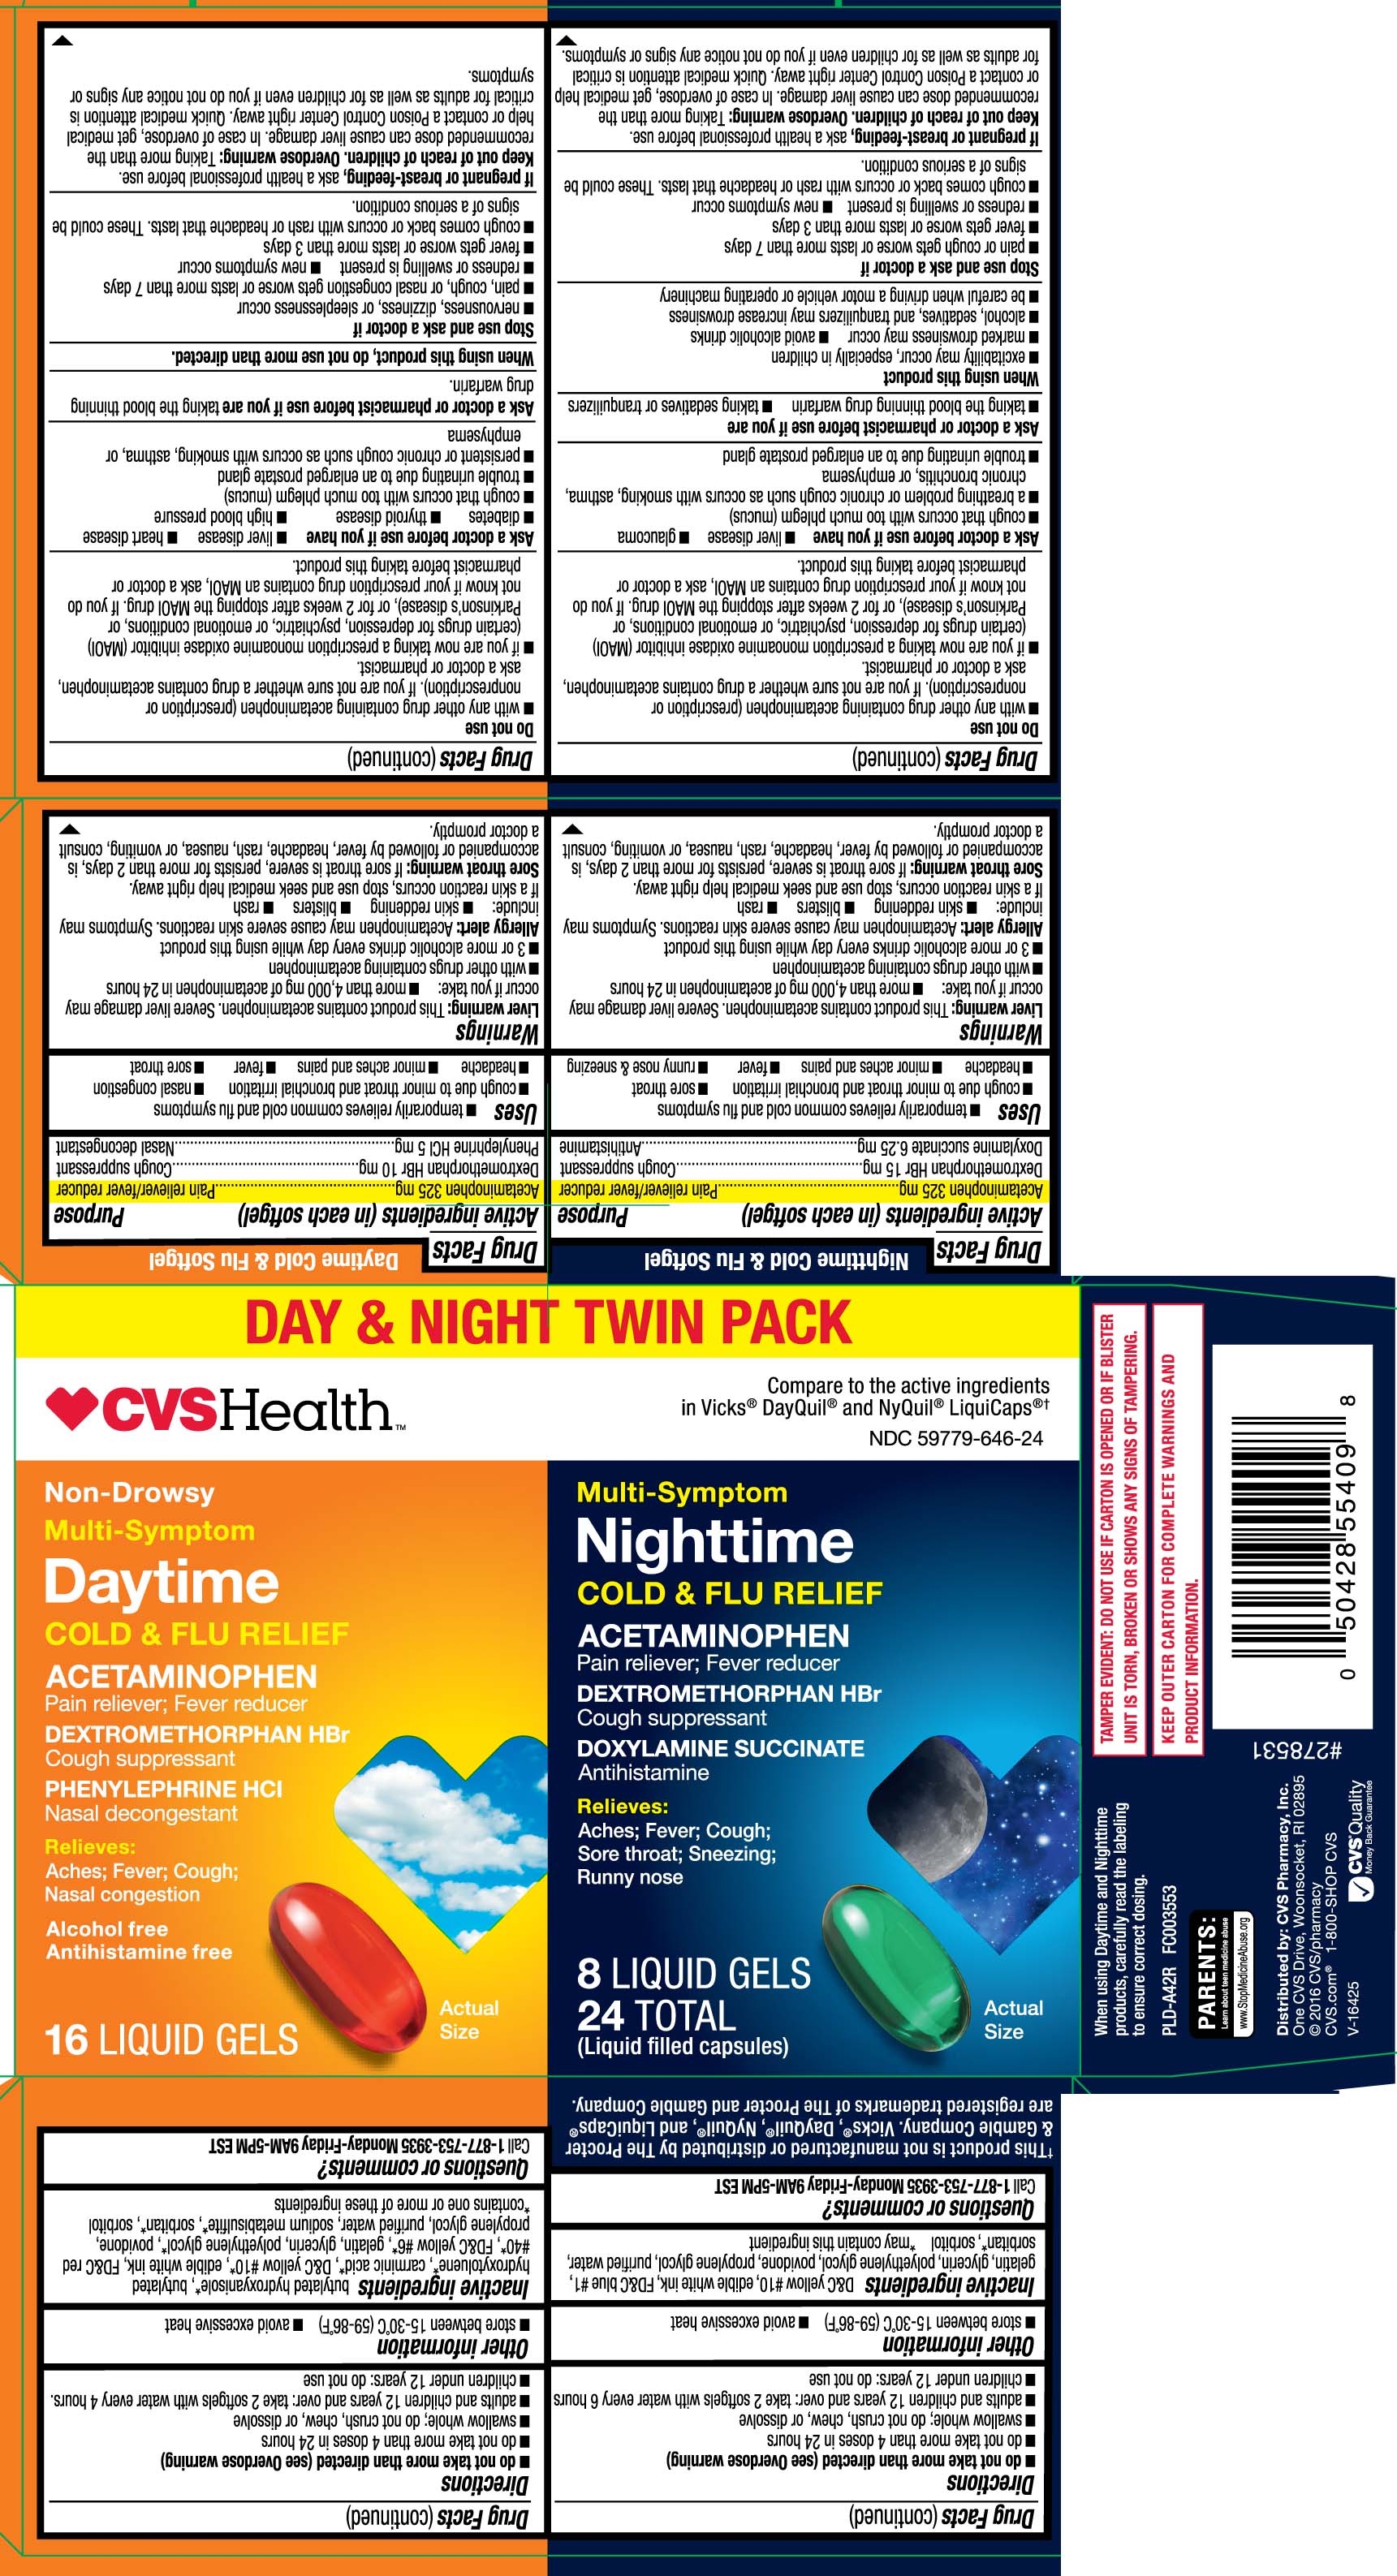 Daytime: Acetaminophen 325 mg, Dextromethorphan HBr 10 mg, Phenylephrine HCl 5 mg Nighttime: Acetaminophen 325 mg, Dextromethorphan HBr 15 mg, Doxylamine succinate 6.25 mg